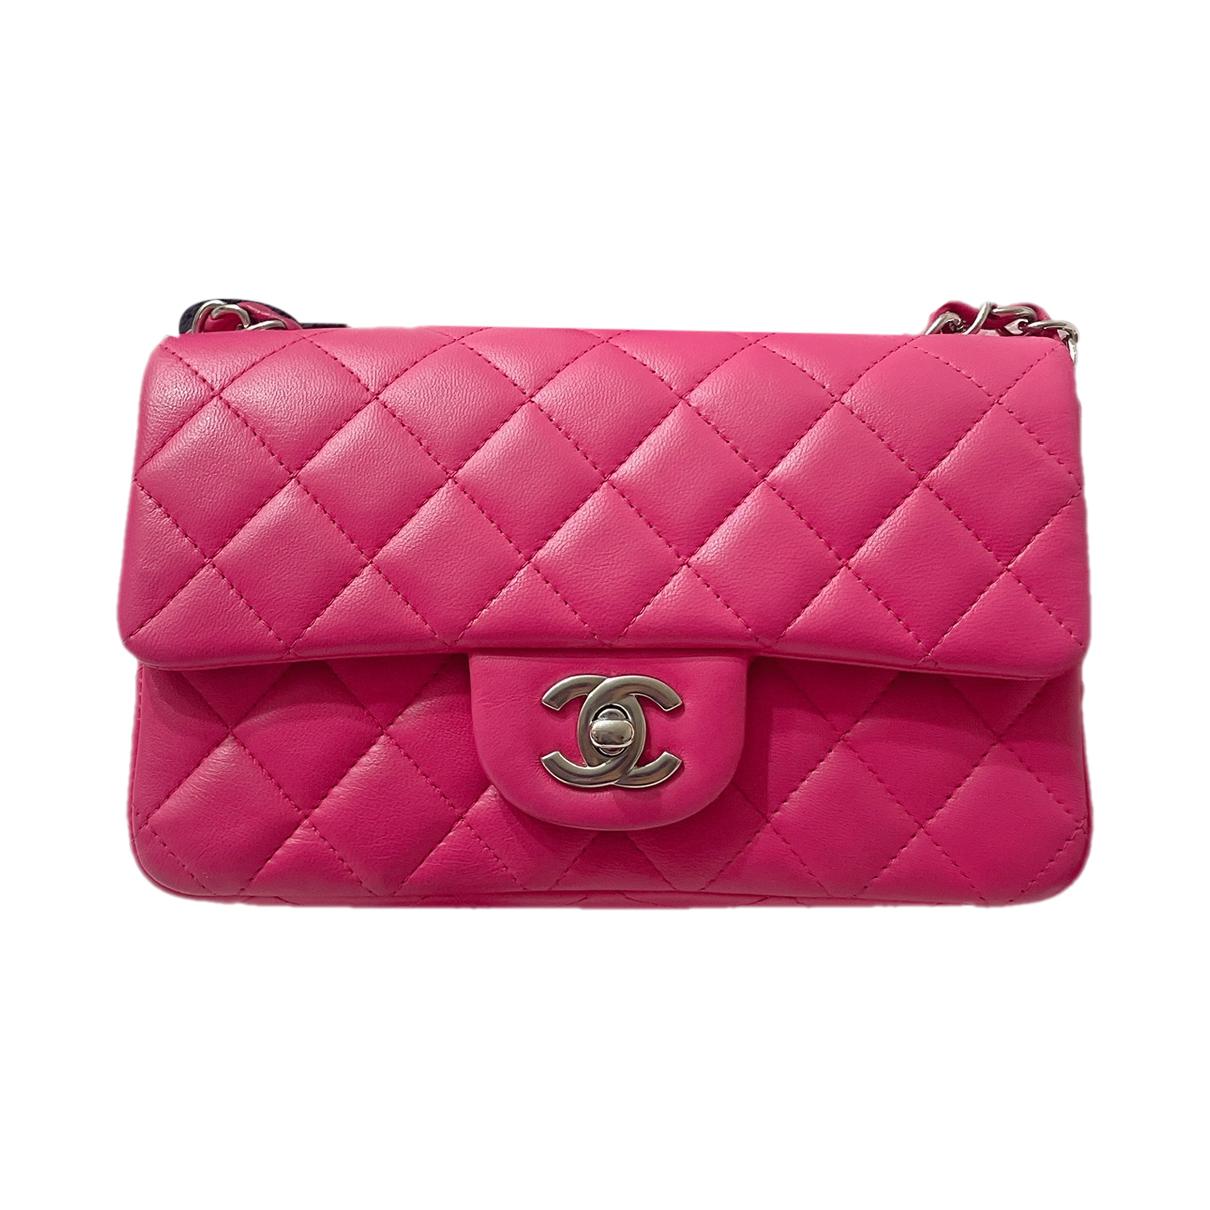 Timeless/classique handbag Chanel Pink in Suede - 30441424